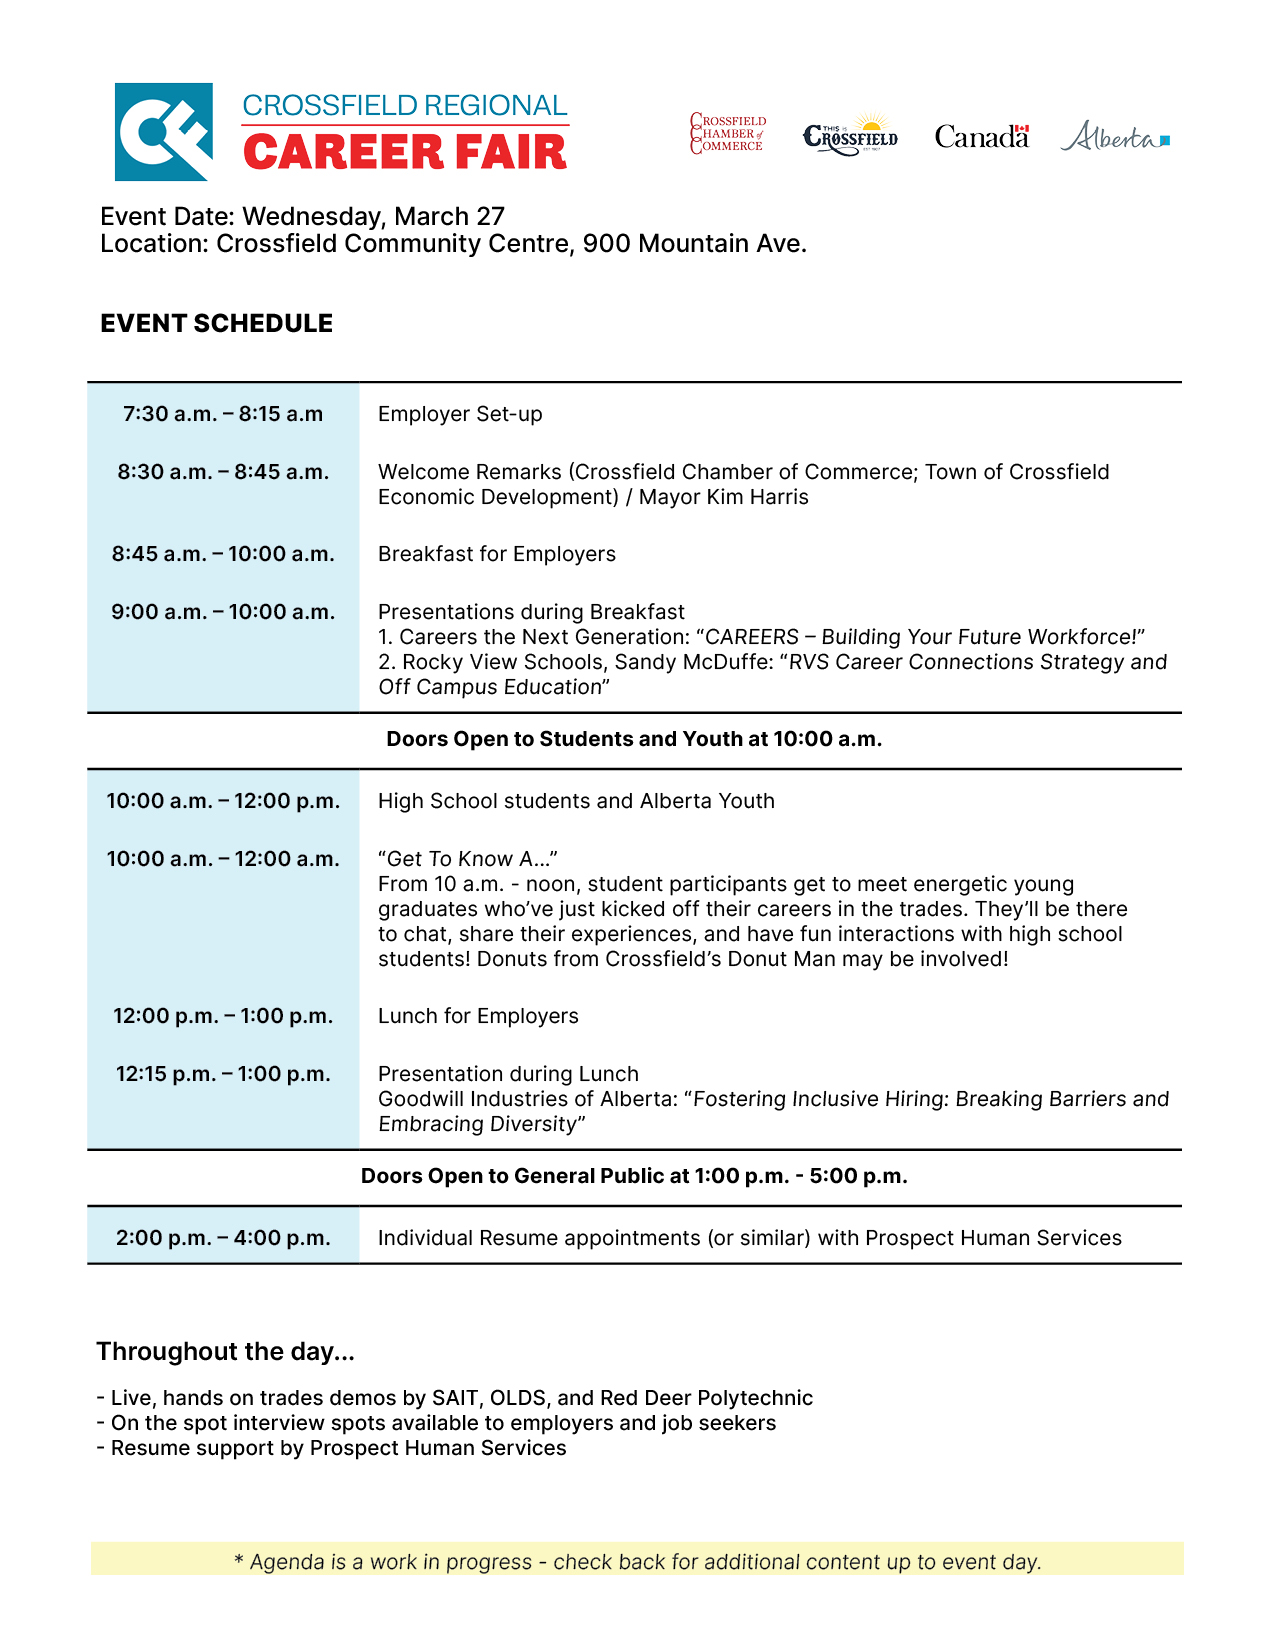 Crossfield Regional Career Fair Event Schedule